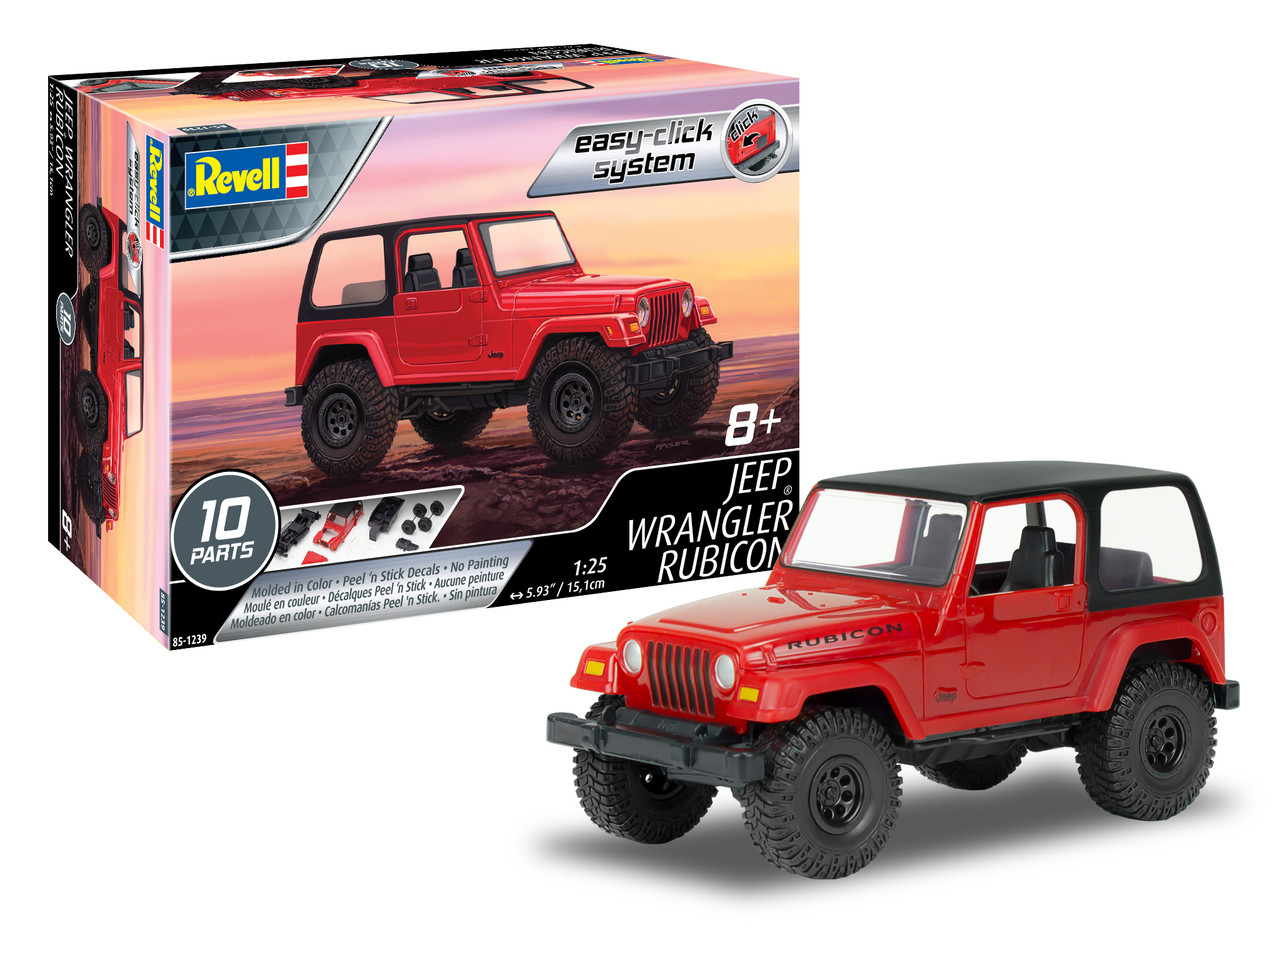 Revell 851239 1:25 Scale Jeep Wrangler Rubicon Level 2 Plastic Model Car Kit  - Crazy Model Trains